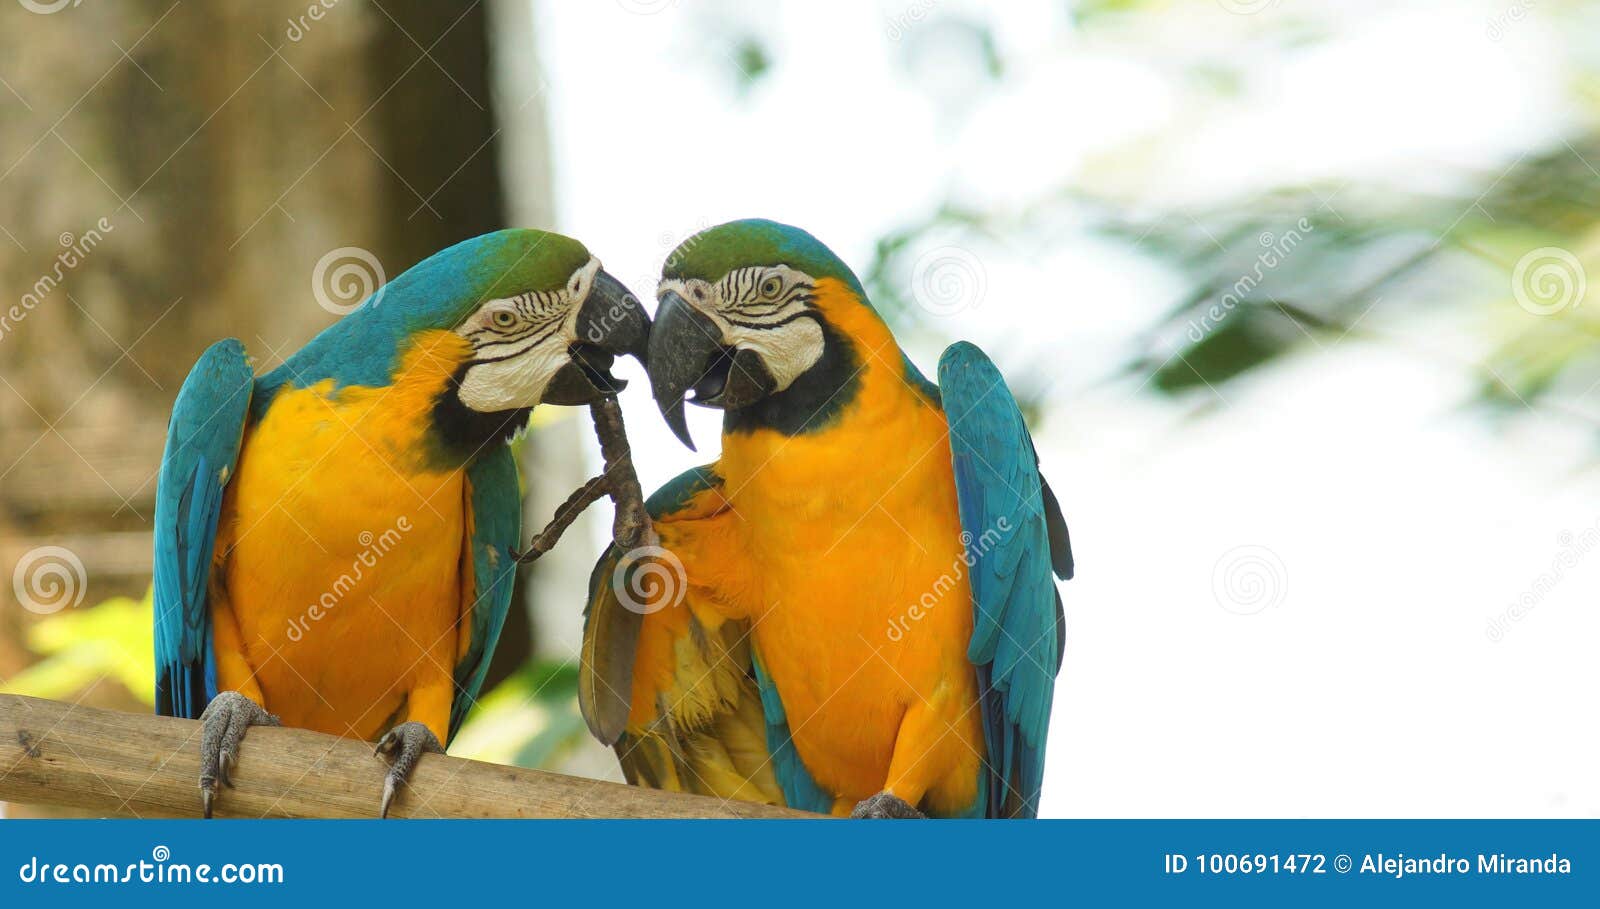 pair of macaws on a branch in ecuadorian amazon. common names: guacamayo or papagayo